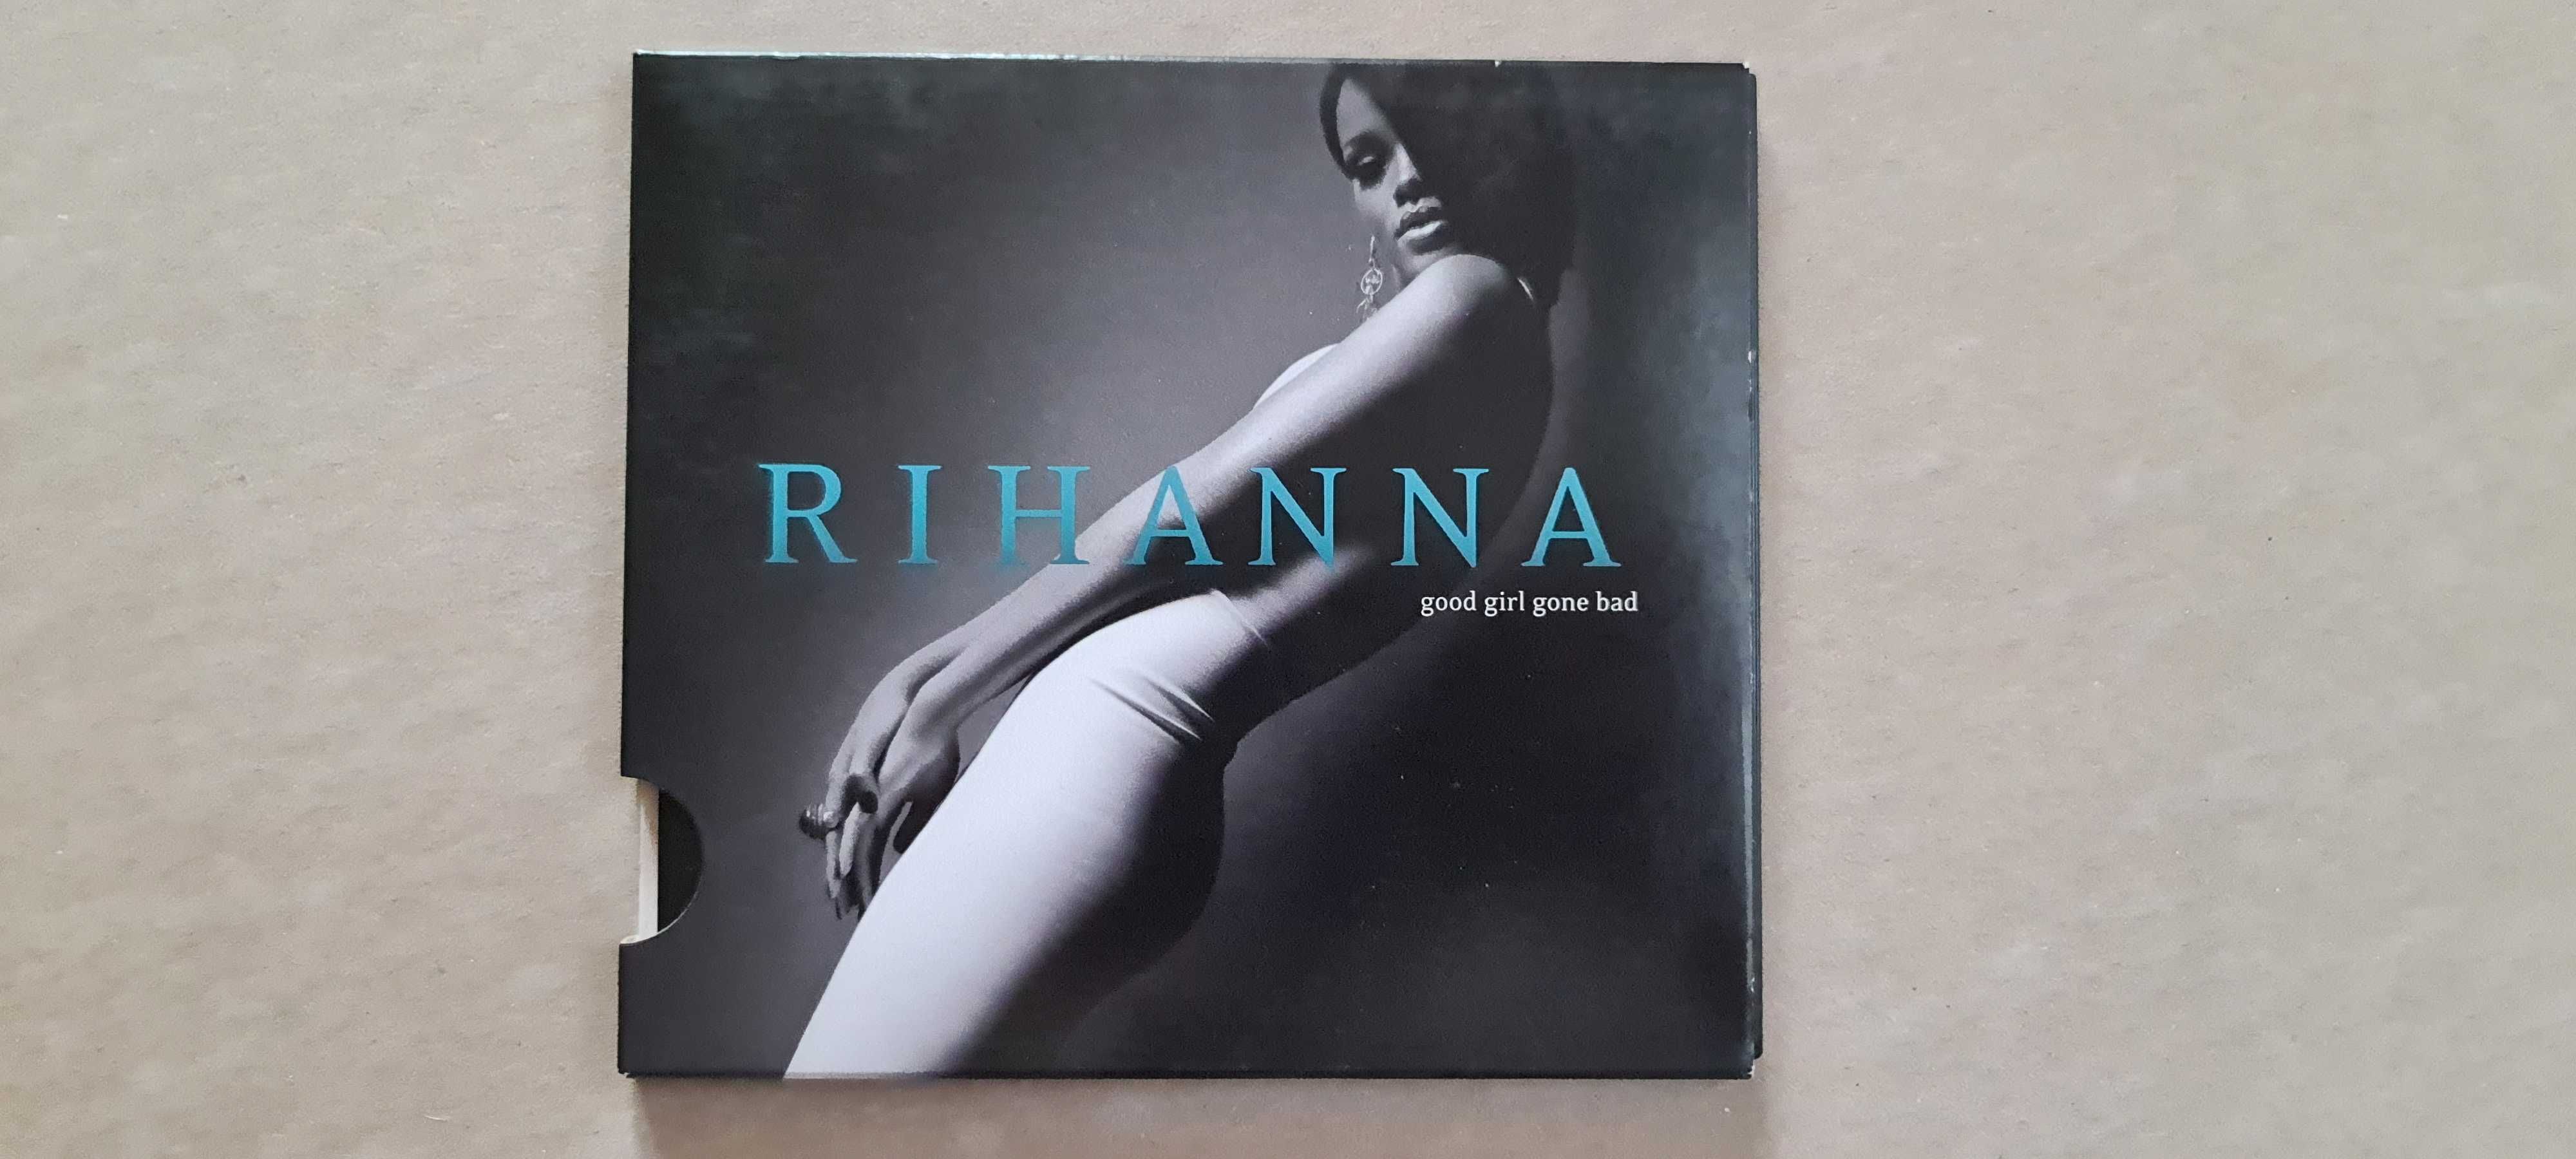 Rihanna "Good girl gone bad" CD